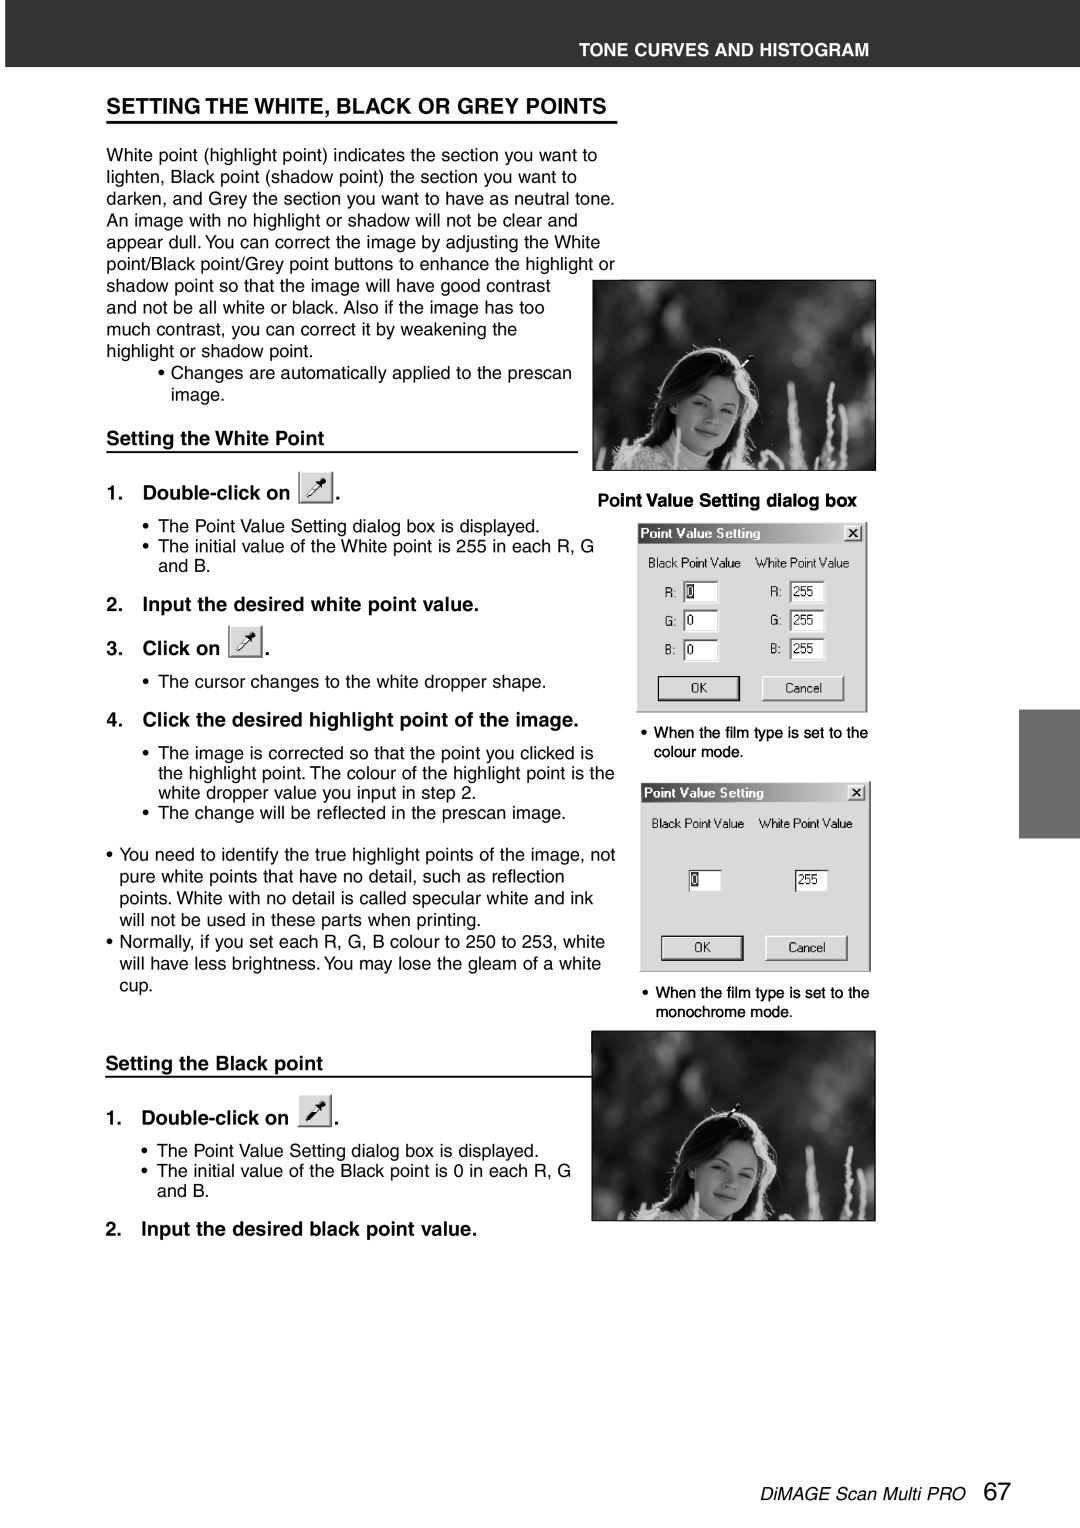 Konica Minolta Scan Multi PRO Setting The White, Black Or Grey Points, Setting the White Point, Double-click on 